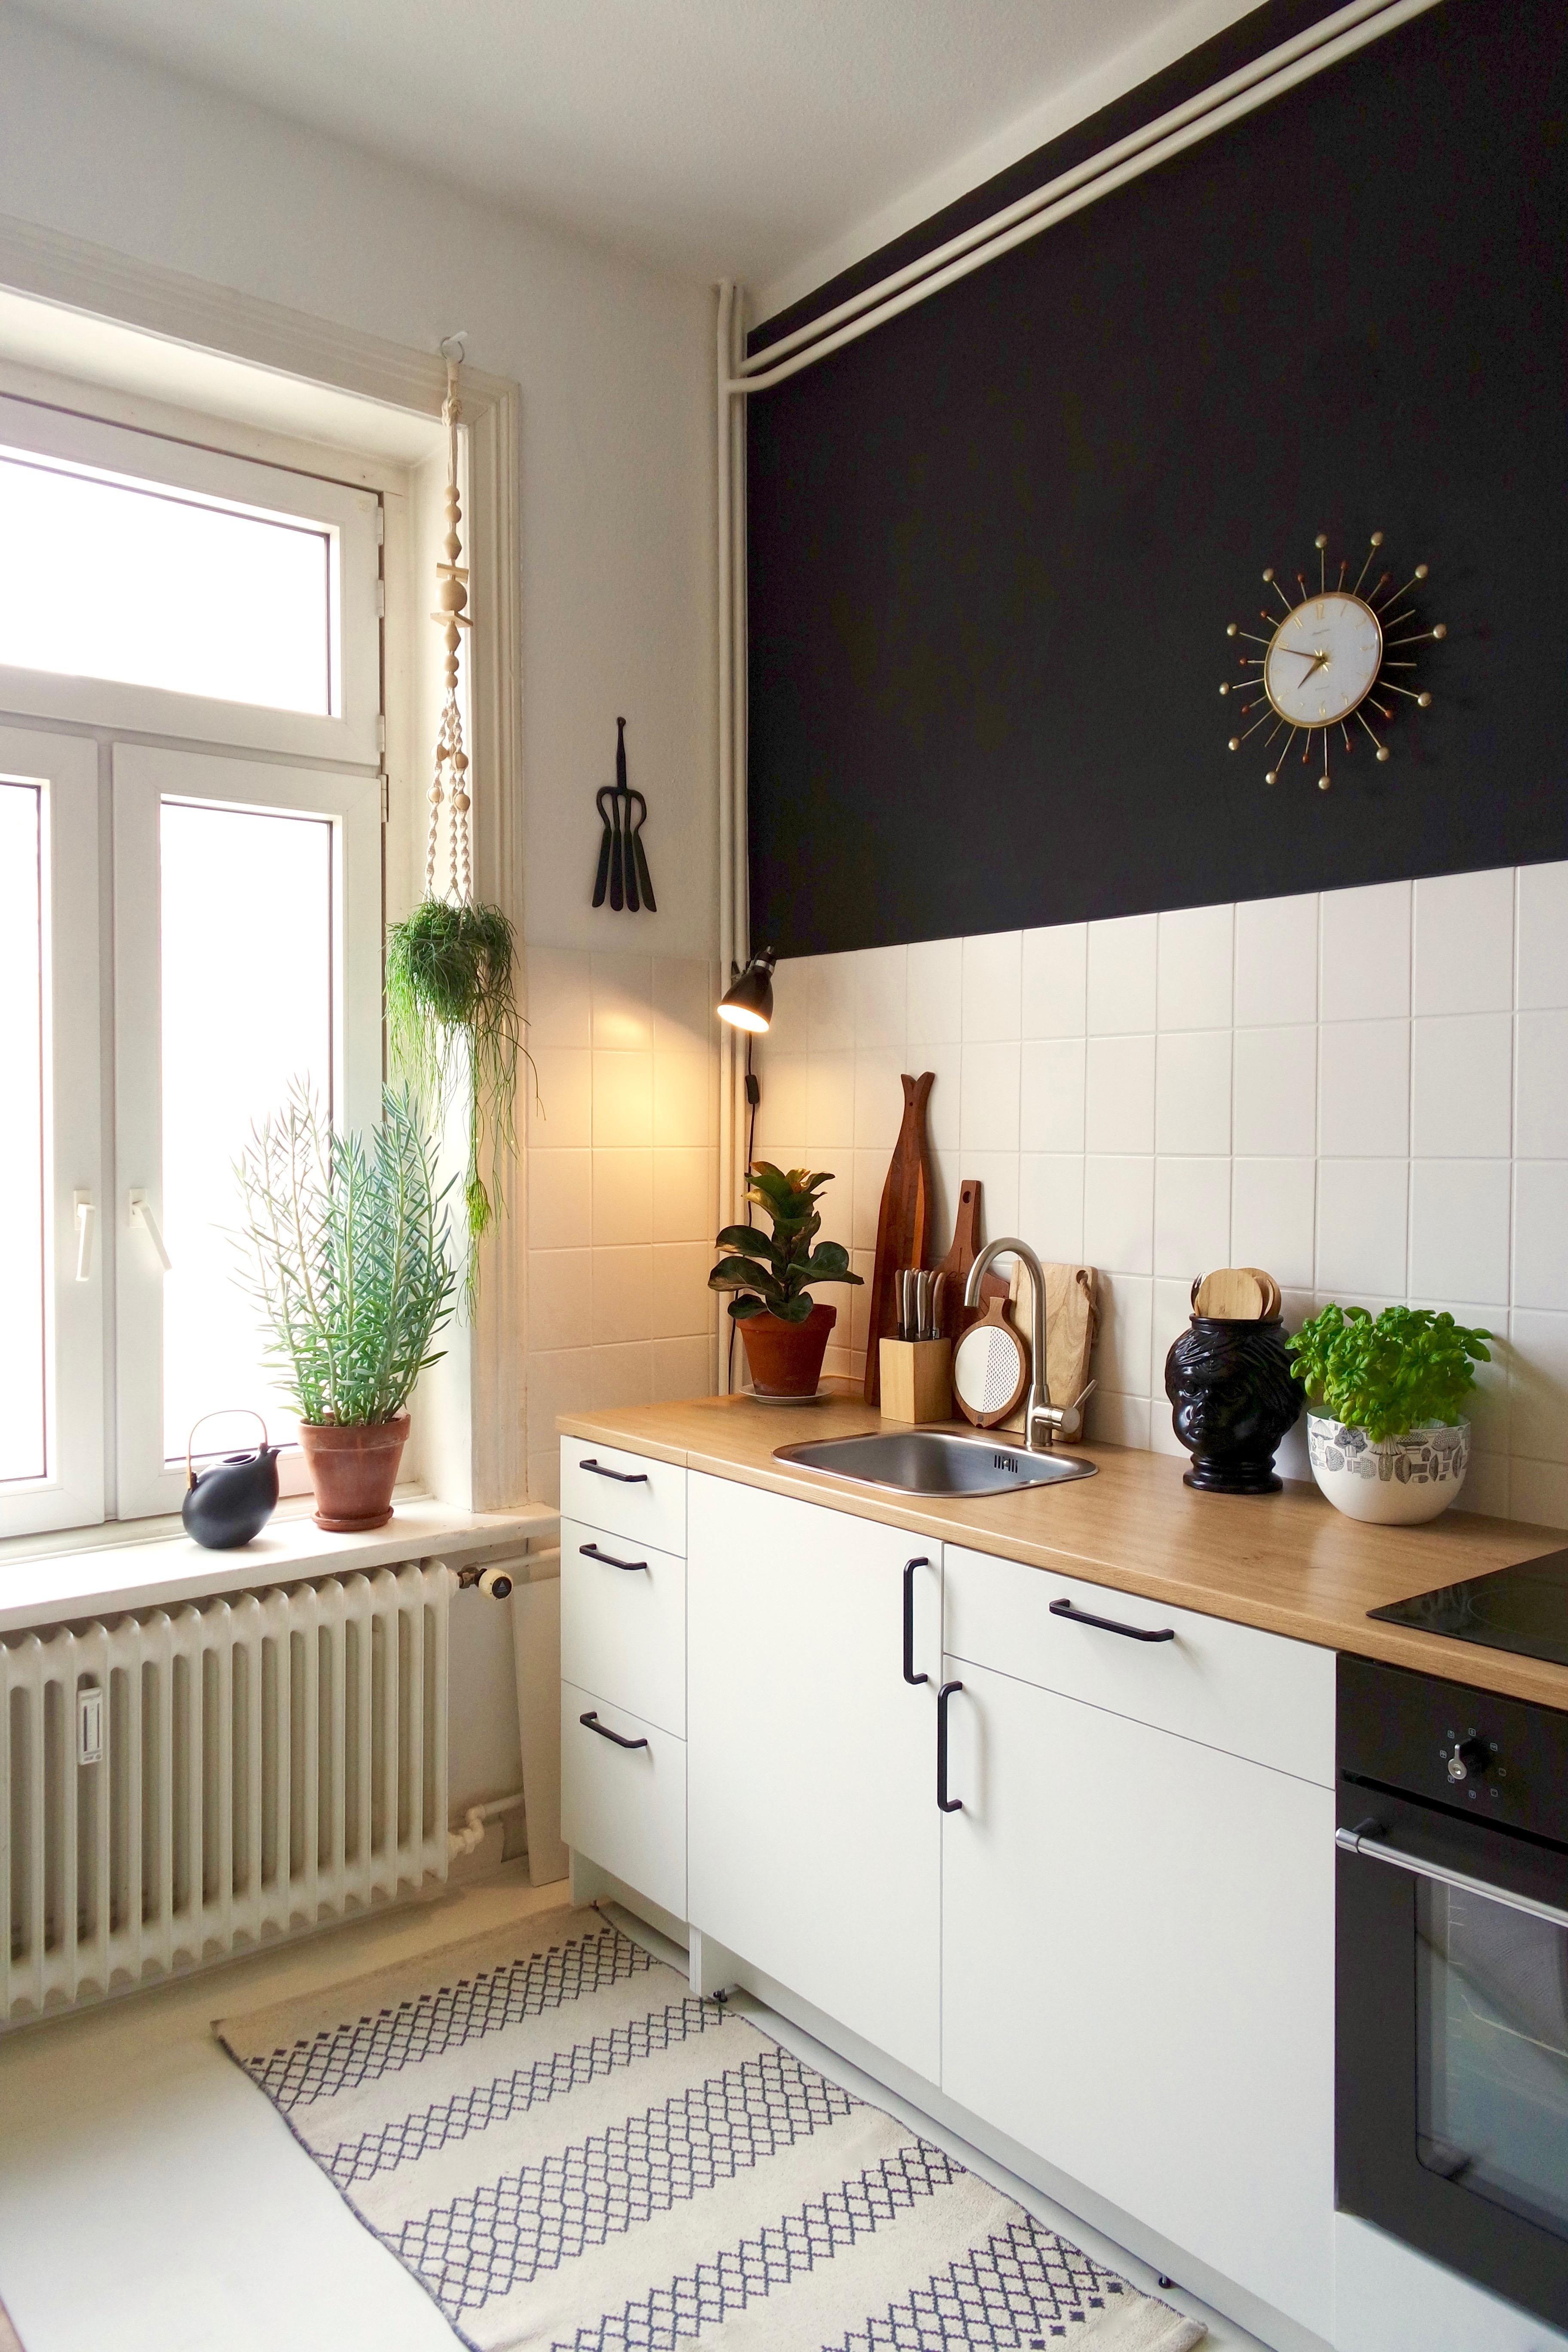 Kitchen View ● 

#danishdesign #vintage #blackwall #altbau #myhome #midcentury 